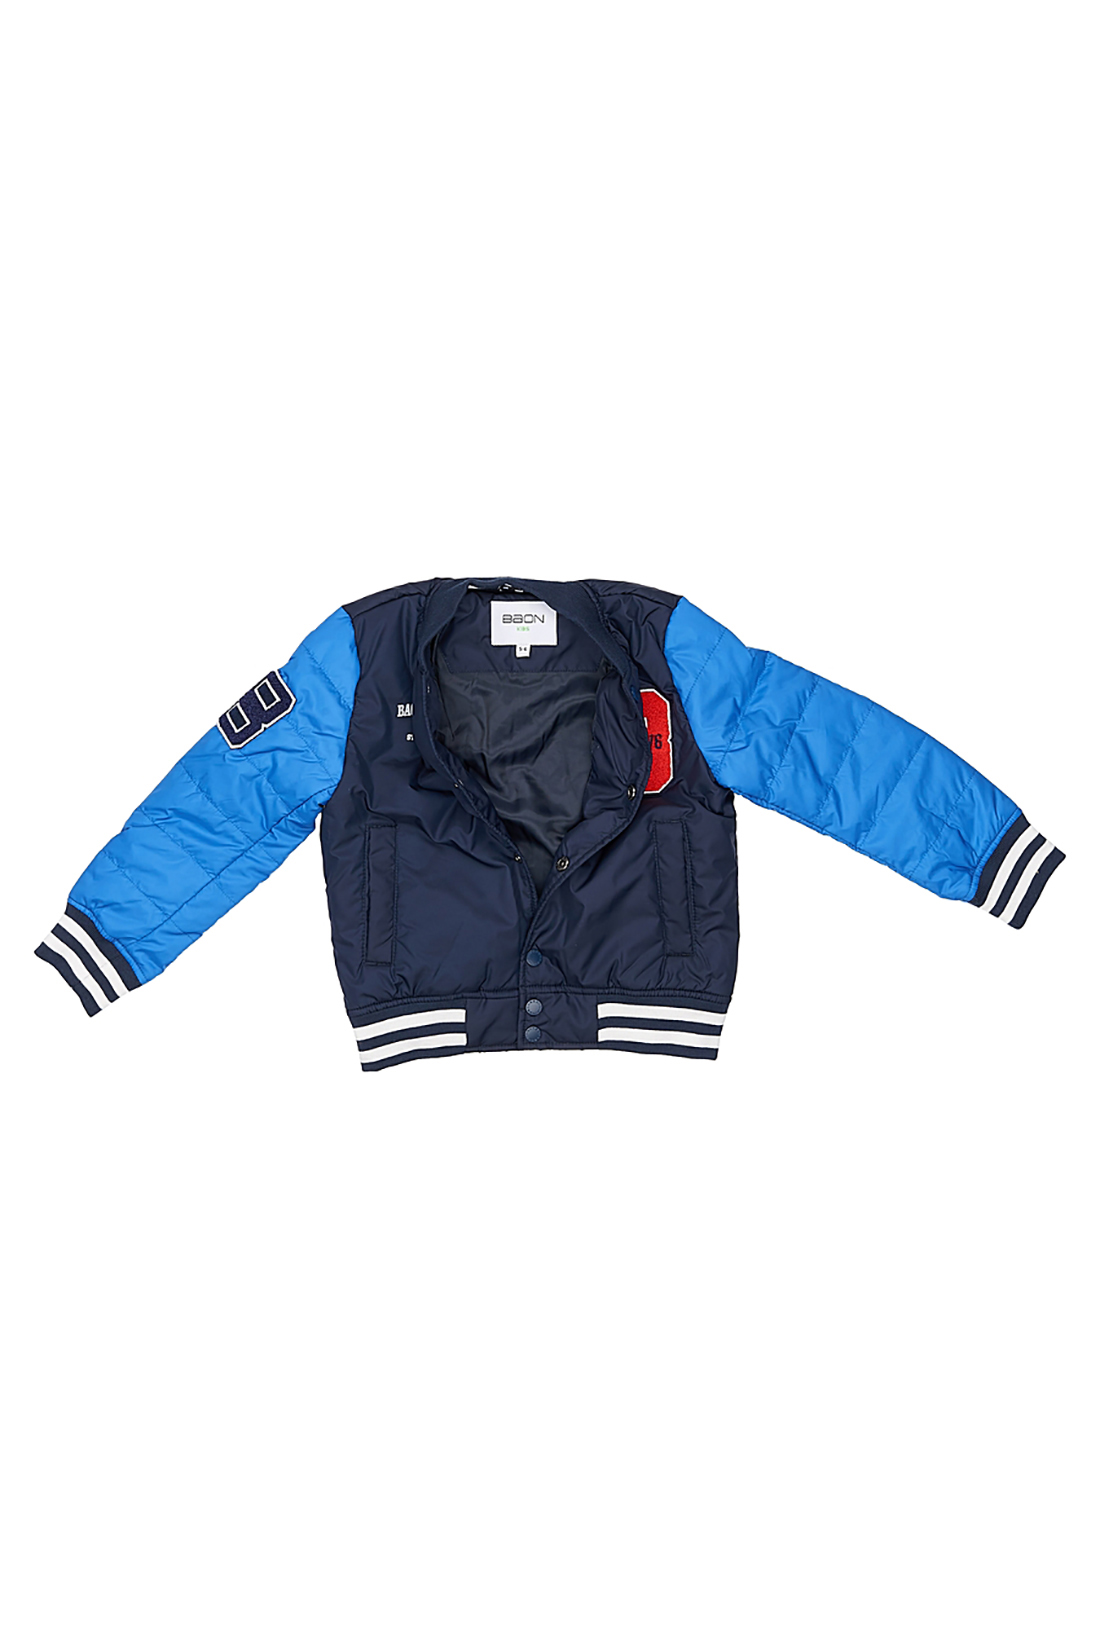 Куртка для мальчика (арт. baon BK538003), размер 110-116, цвет синий Куртка для мальчика (арт. baon BK538003) - фото 2